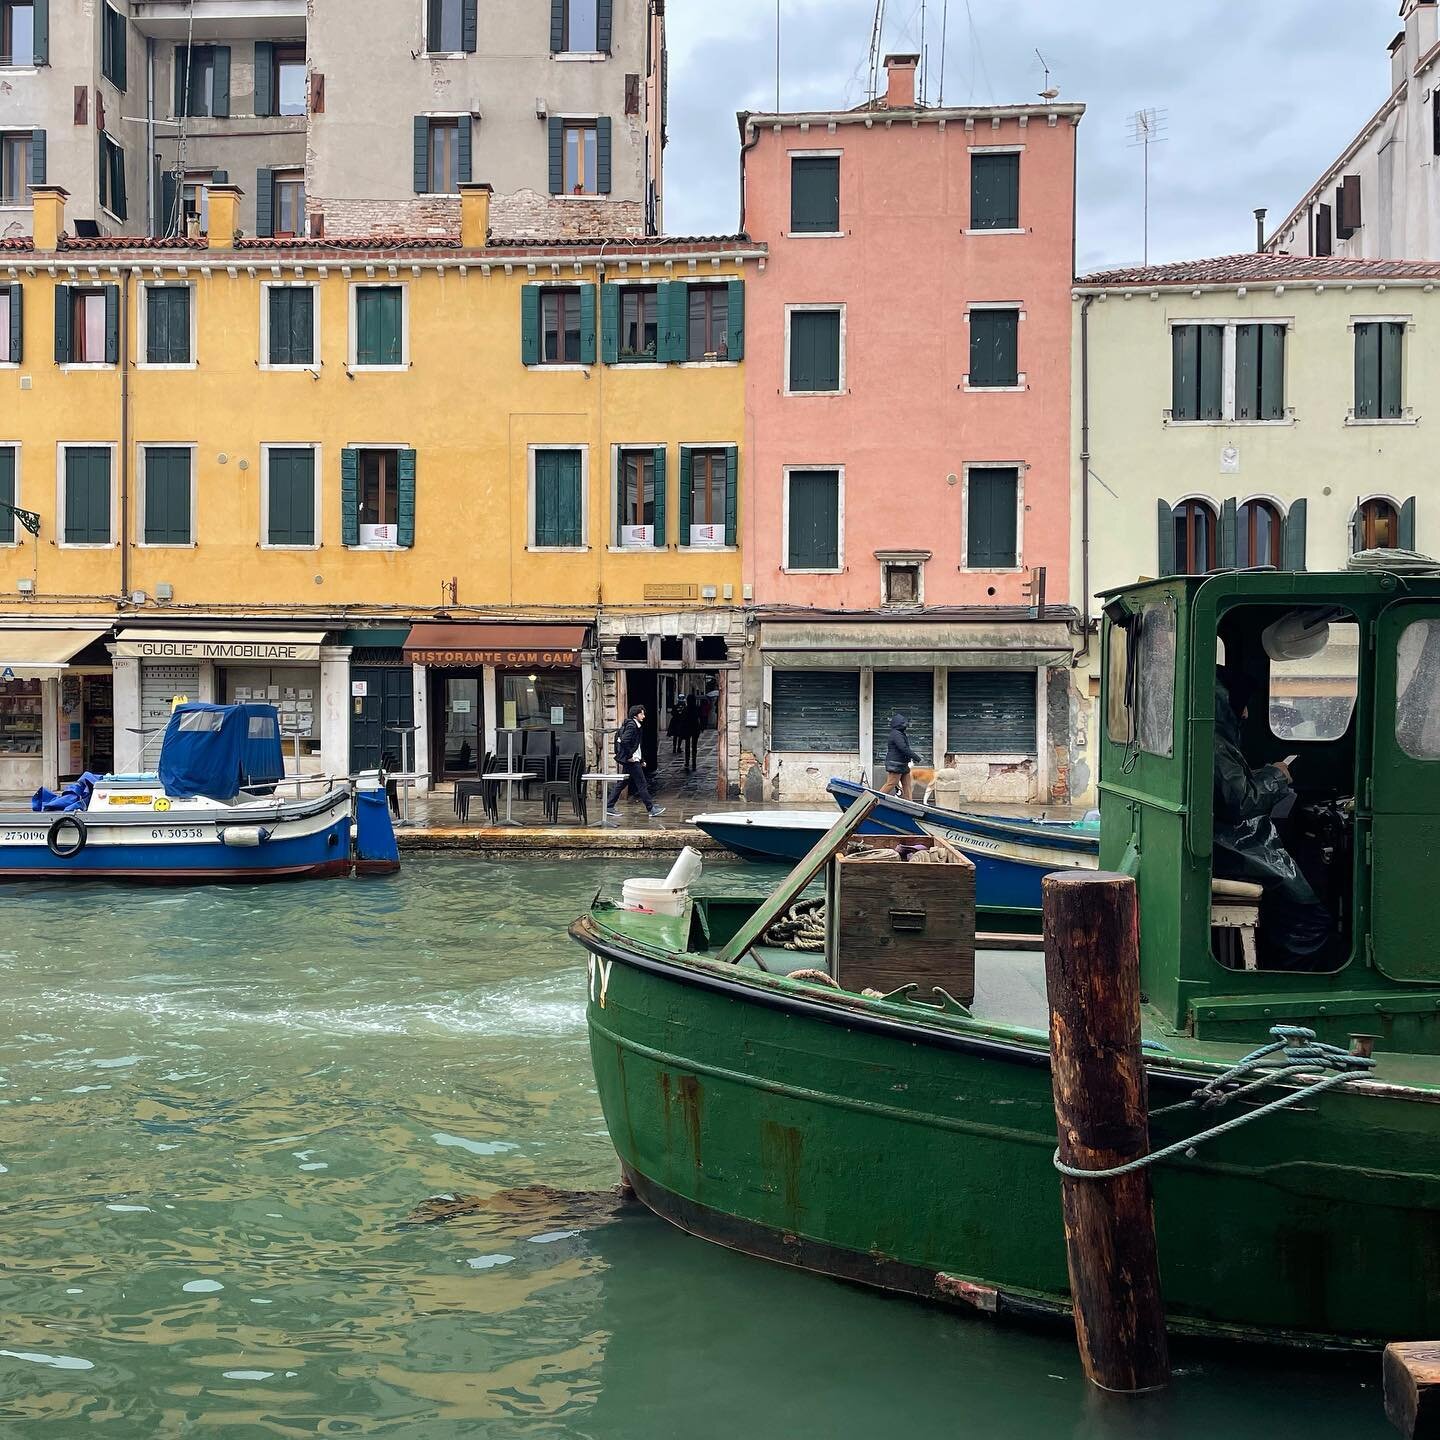 The real deal while wandering the streets of Venice 🙋&zwj;♀️

.
.
.
.
.
#offthebeatenpath #offthebeatentrack #venetian #veneto #visitveneto #art #visititaly #venicelikealocal #travelstyle #travelart #travelstories #cannaregio #veniceitaly #wanders #